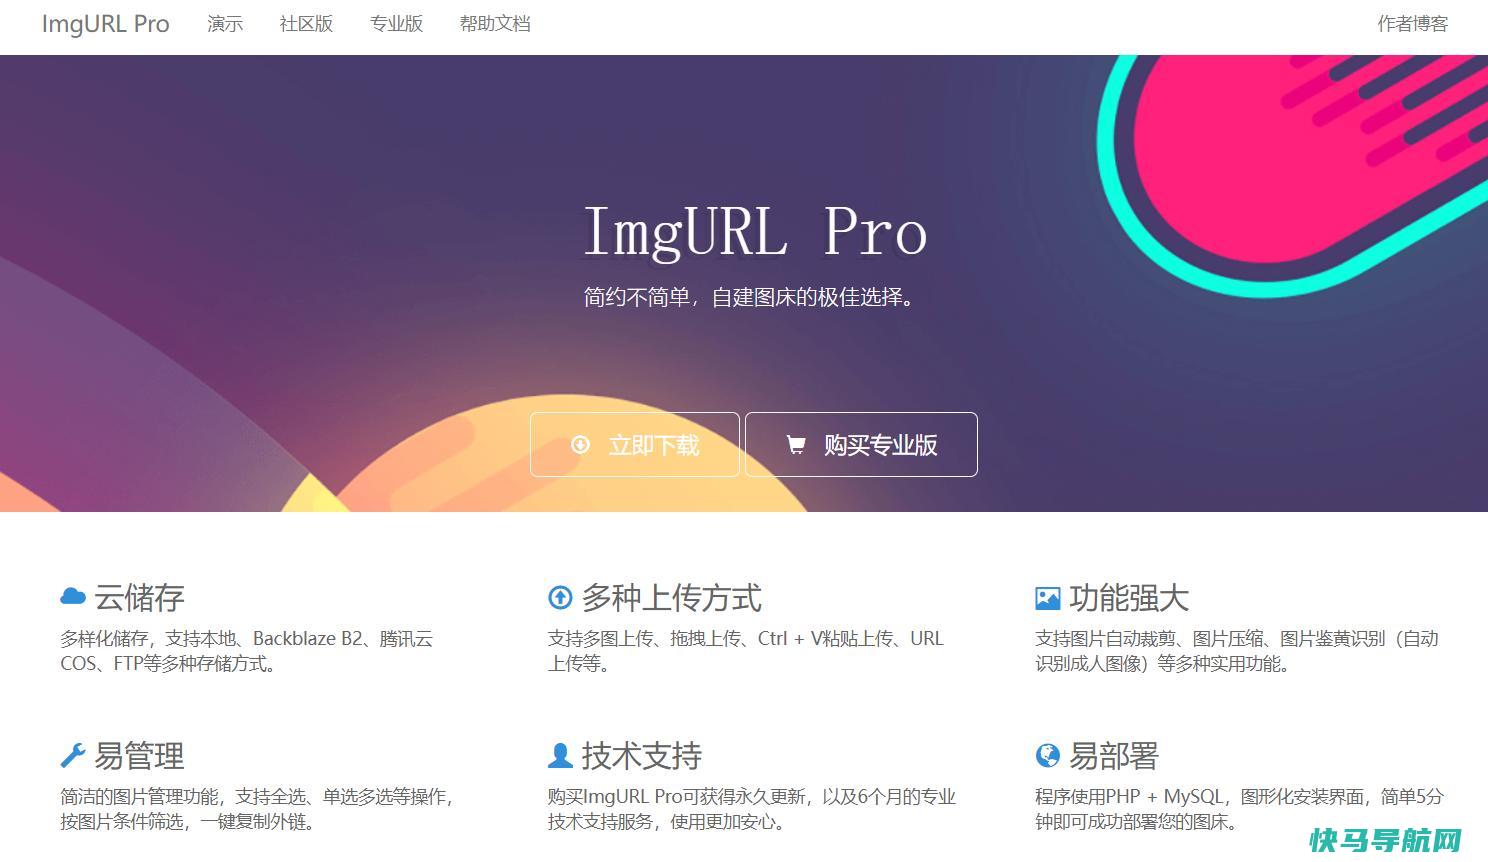 ImgURL Pro专业版图床程序2.1.1更新，文末有福利